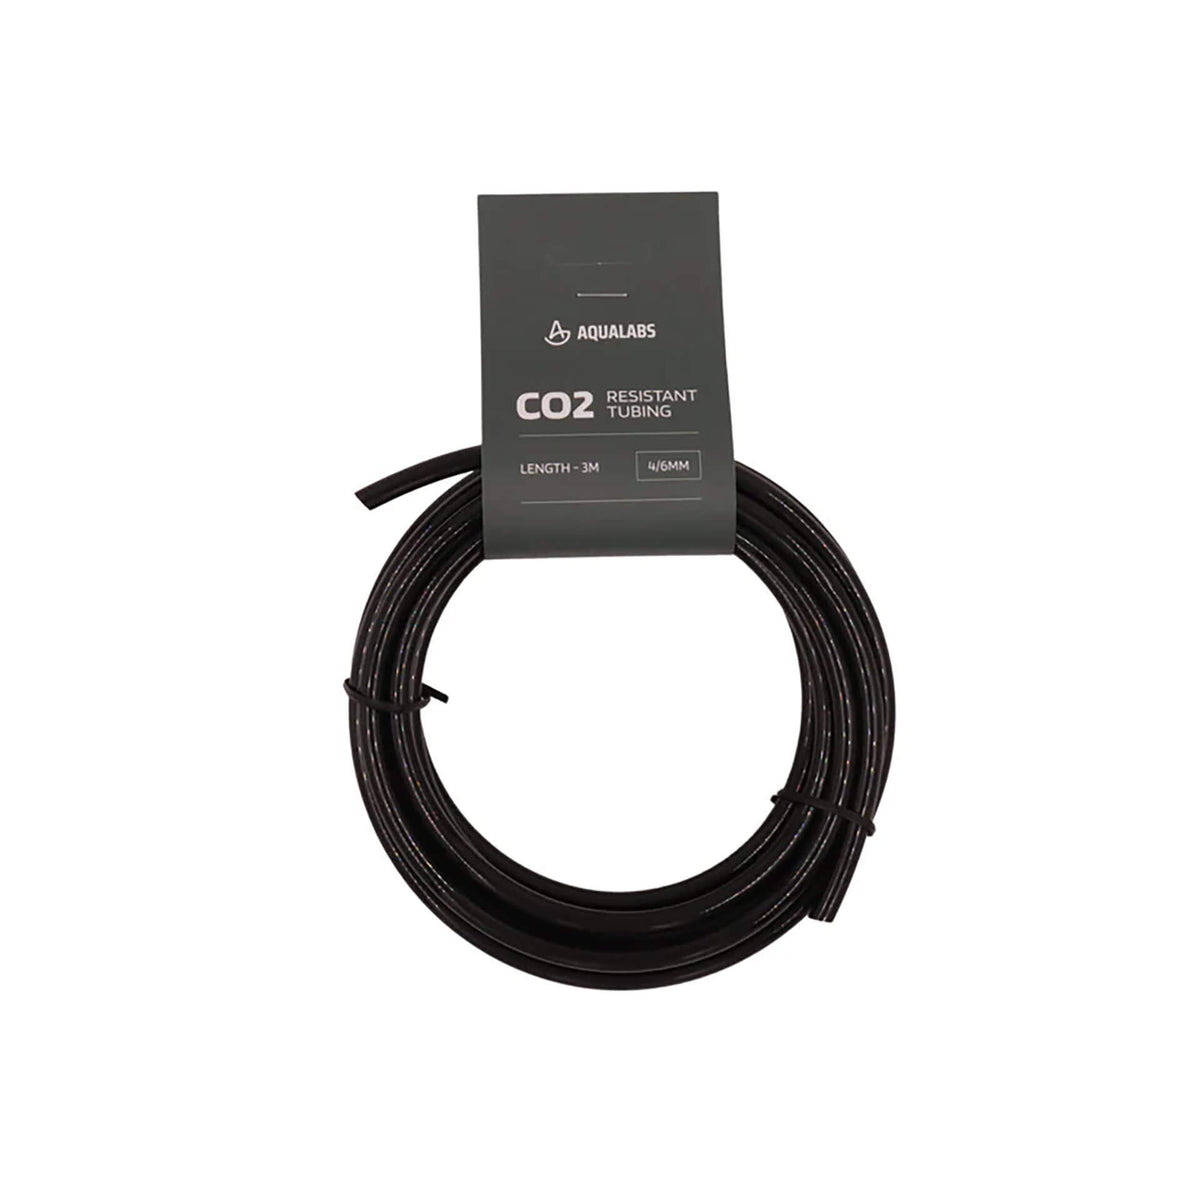 AquaLabs CO2 Resistant Tubing 3m - Black